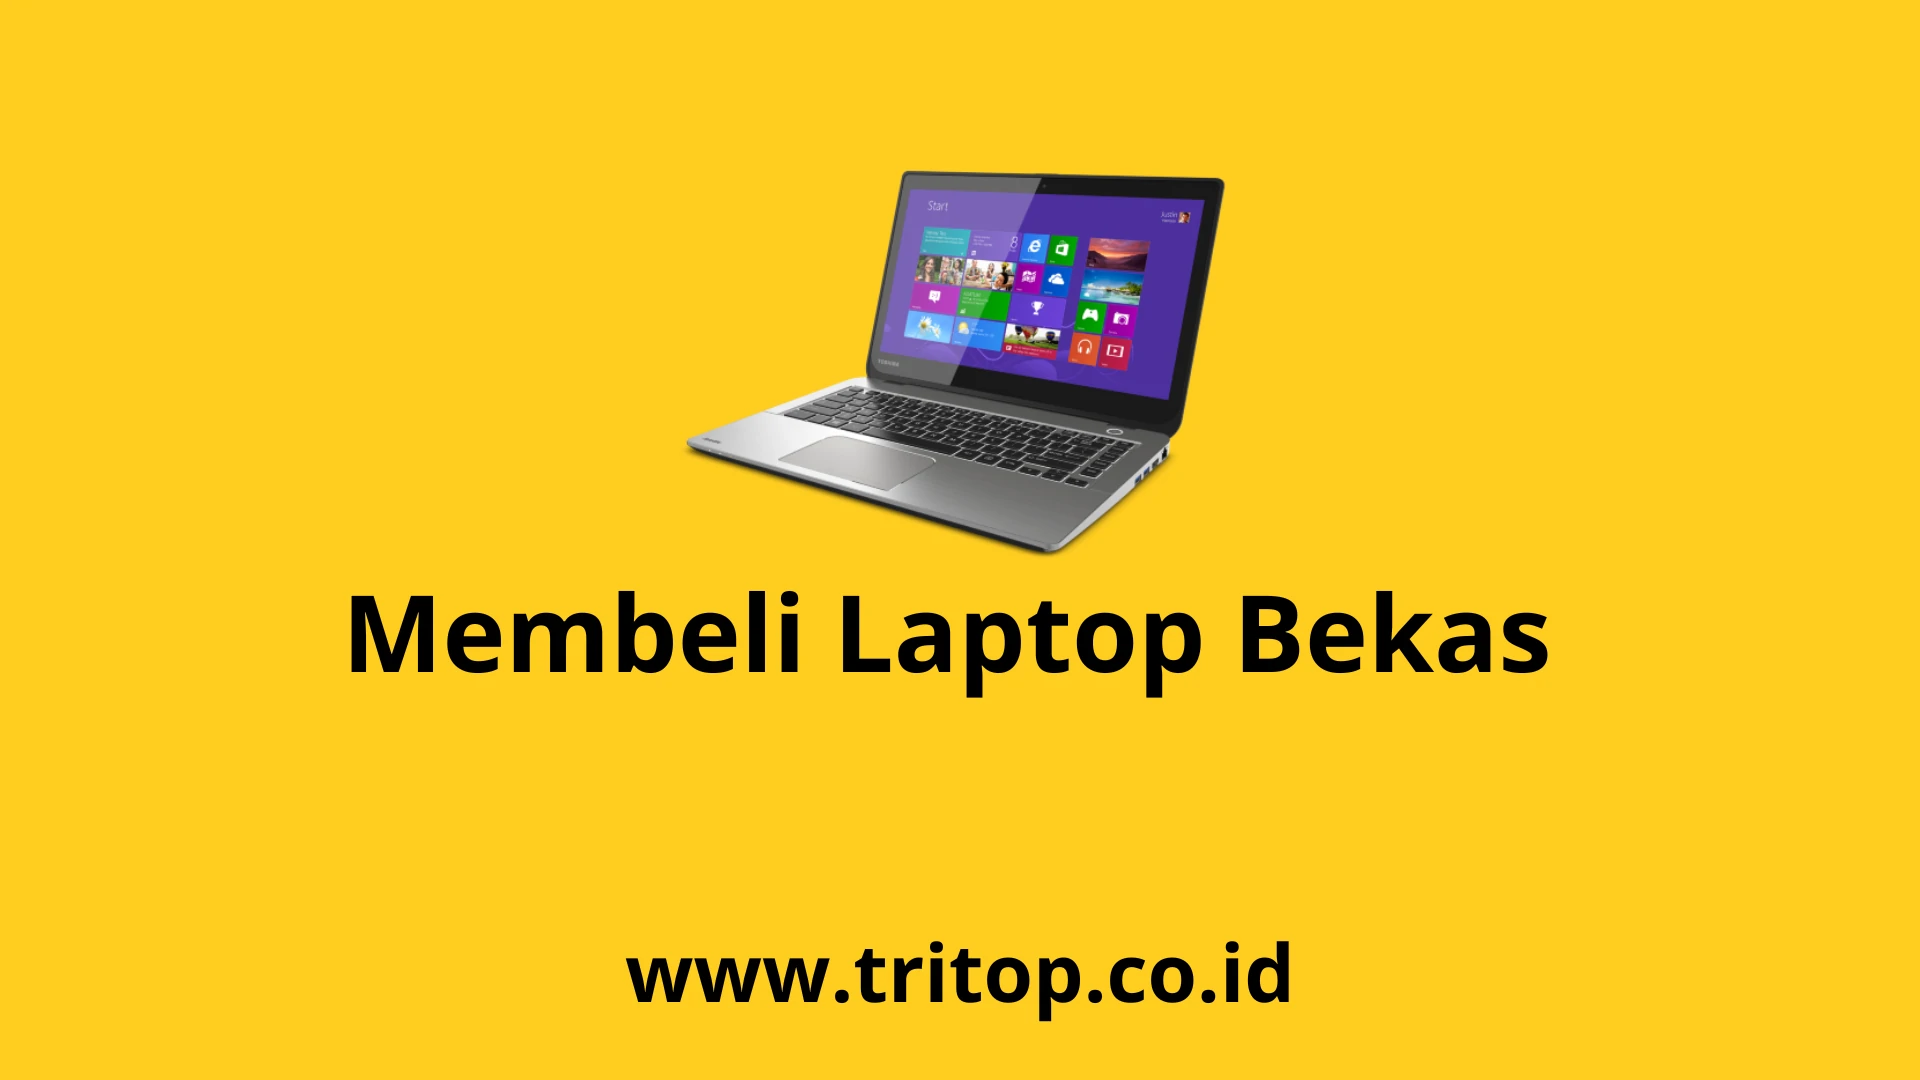 Membeli Laptop Bekas Tritop.co.id